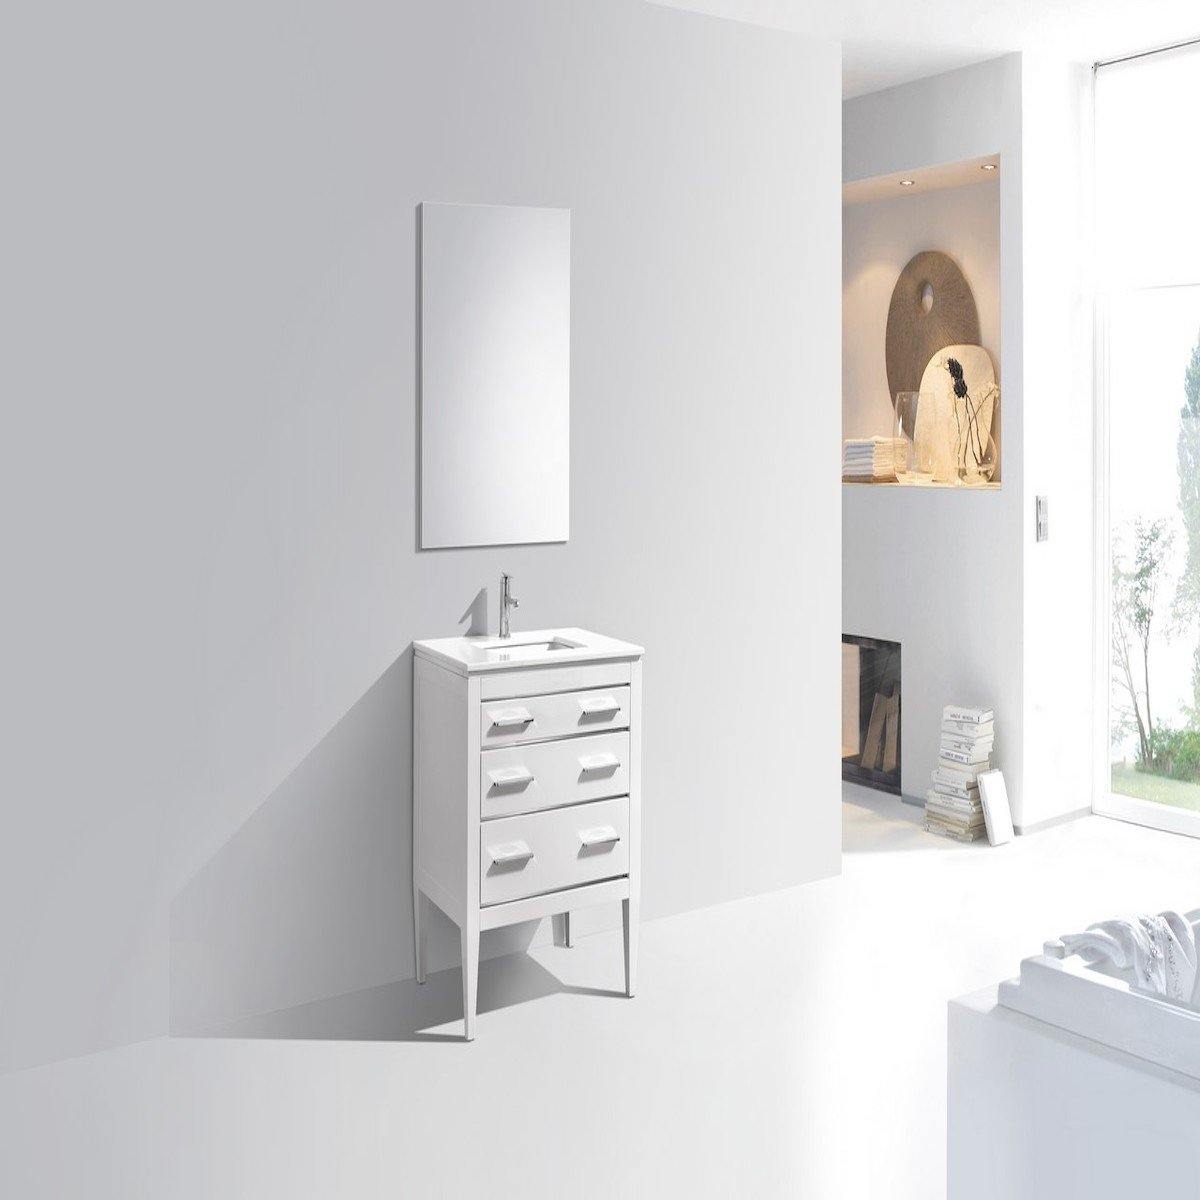 KubeBath Eiffel 30" High Gloss White Single Vanity with Quartz Countertop in Bathroom E30-GW